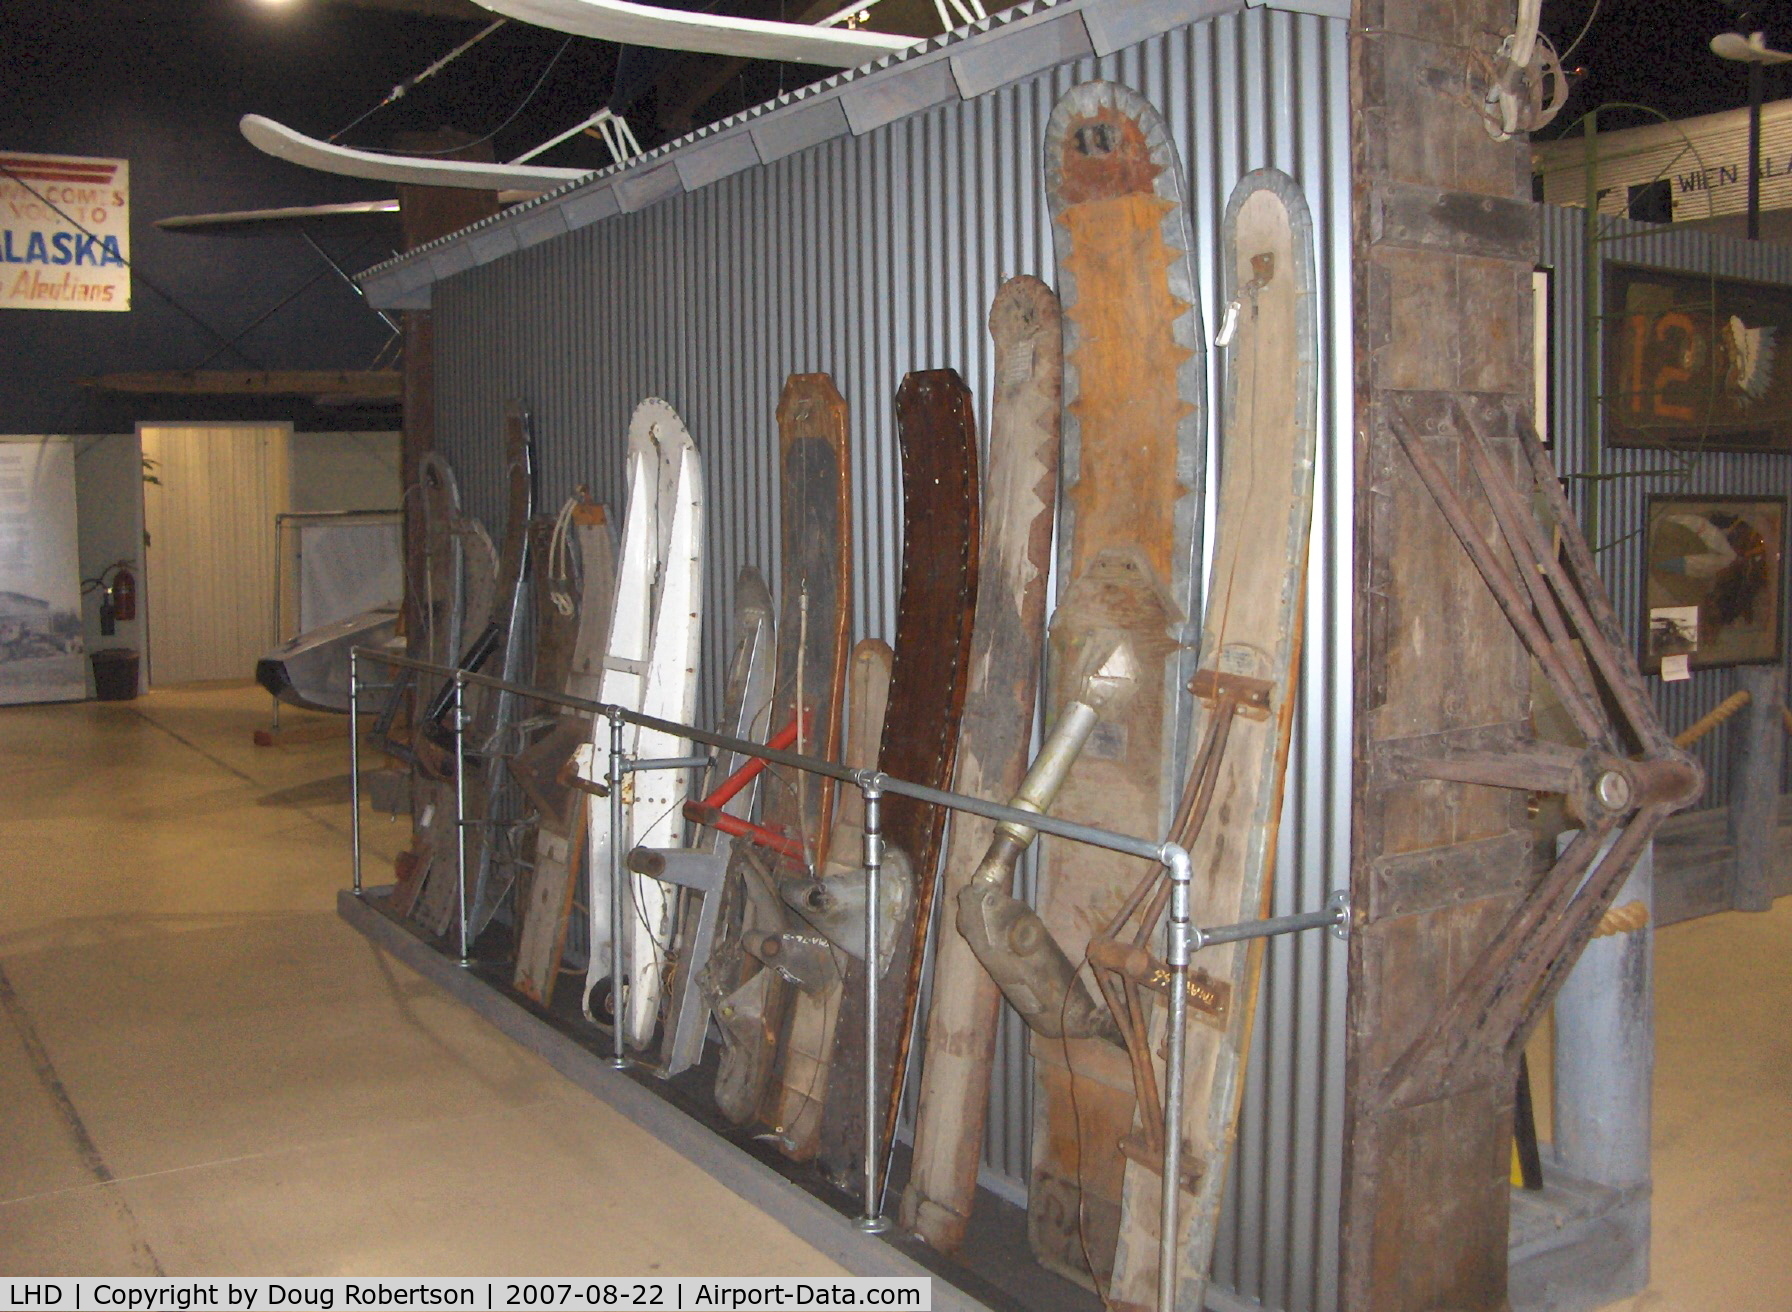 Lake Hood Seaplane Base (LHD) - Aircraft Skis in Ski Alley of Alaska Aviation Heritage Museum